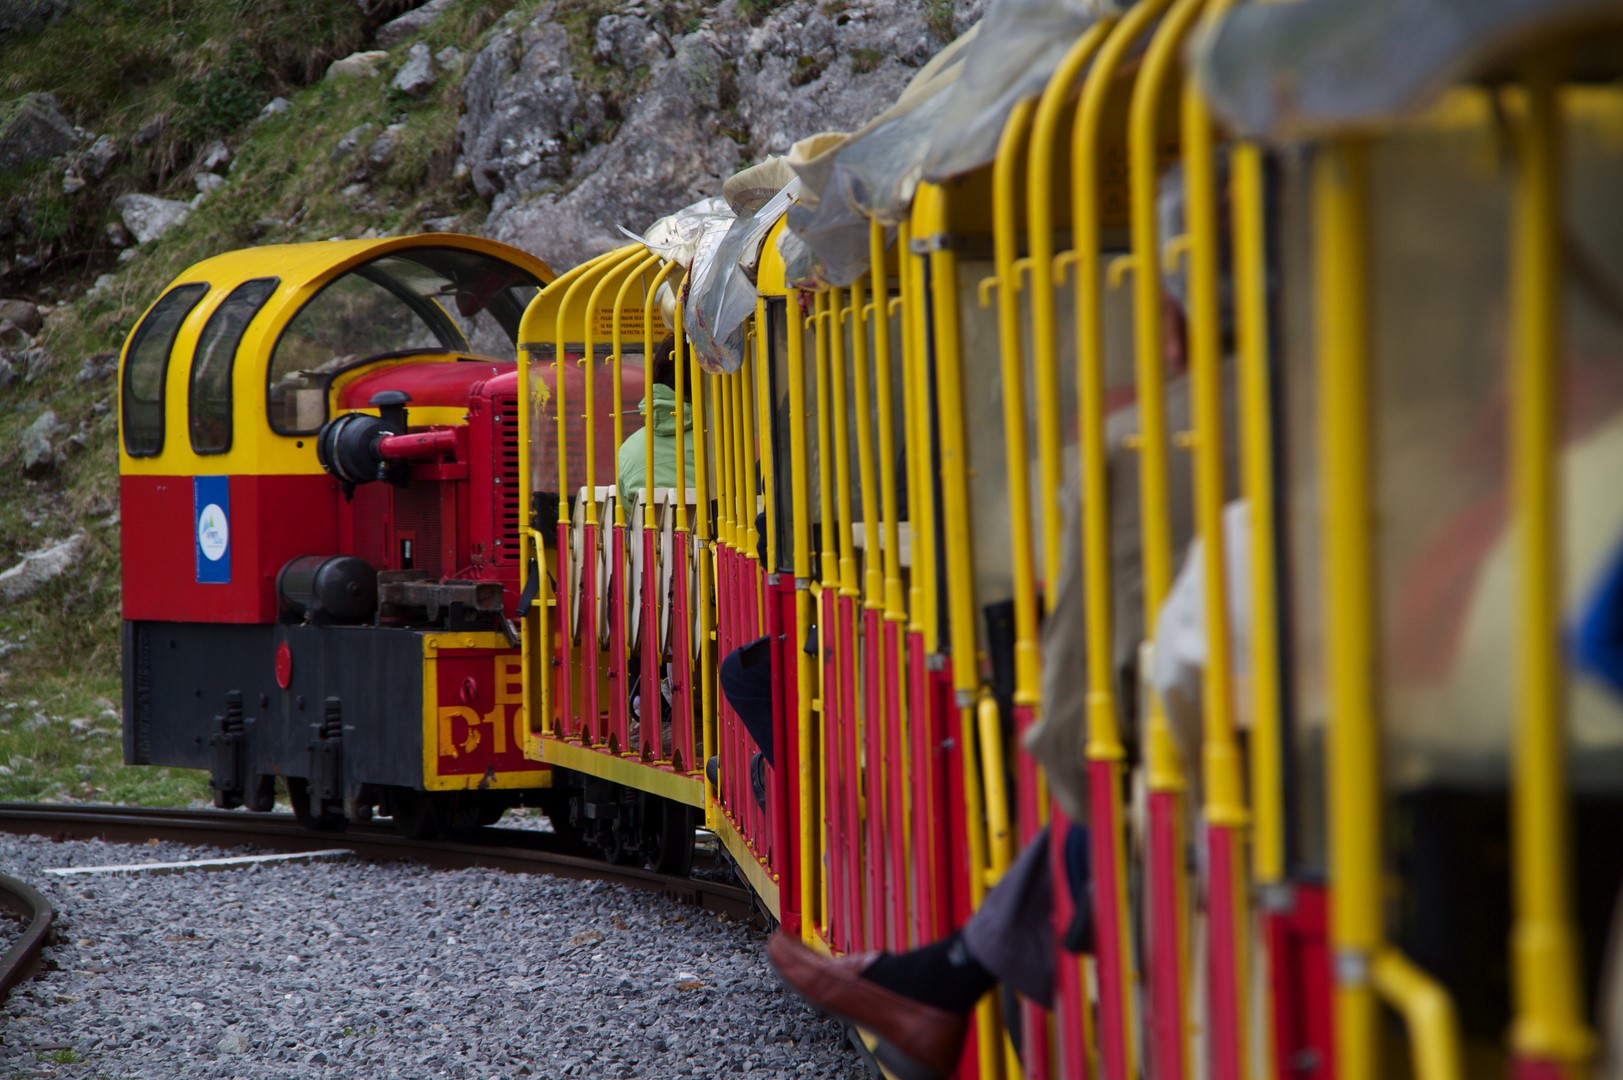 The Train d'Artouste: Europe's highest narrow-gauge train